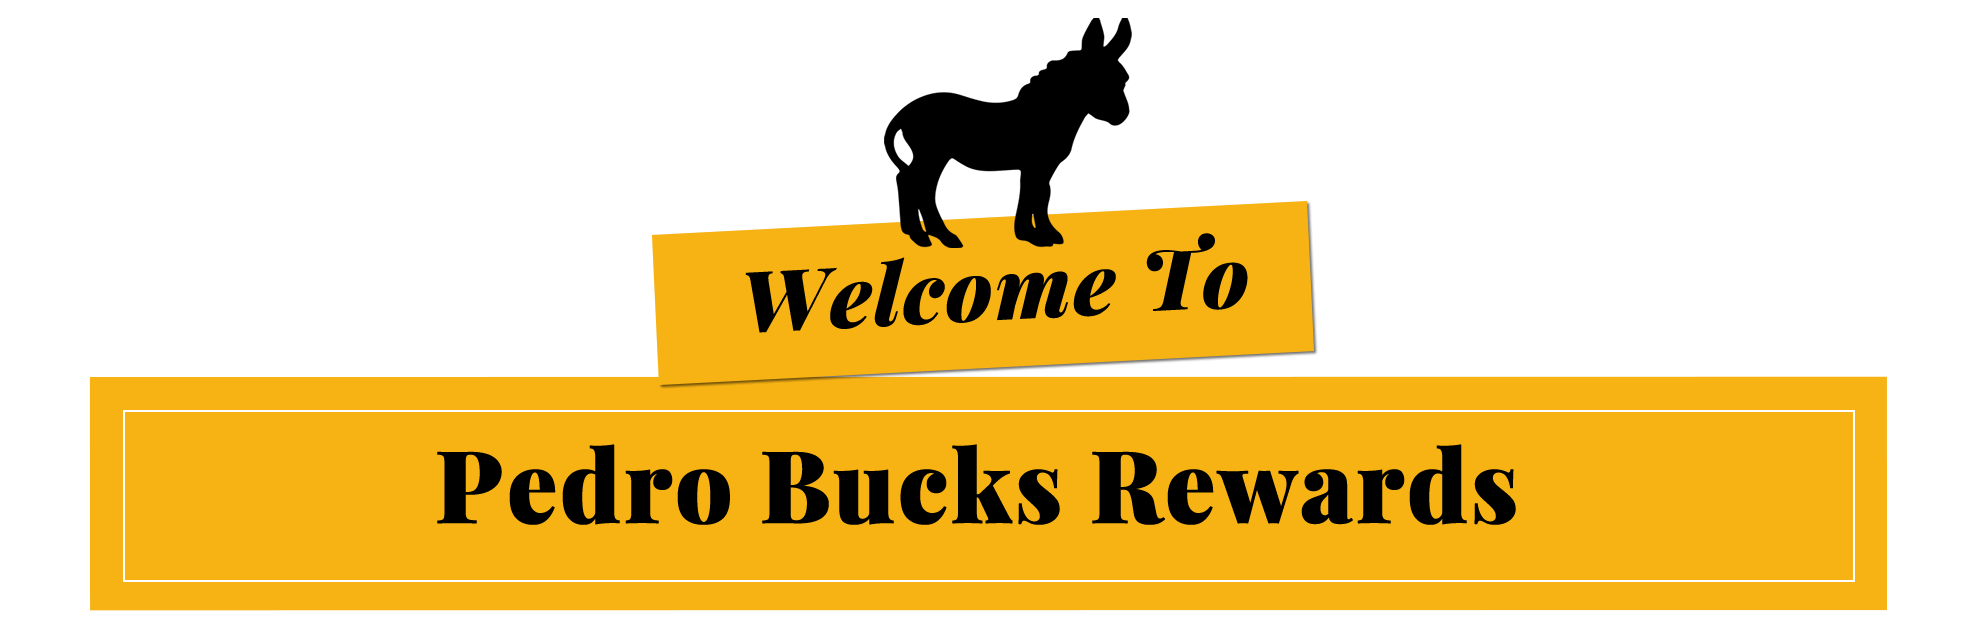 Welcome To Pedro Bucks Rewards